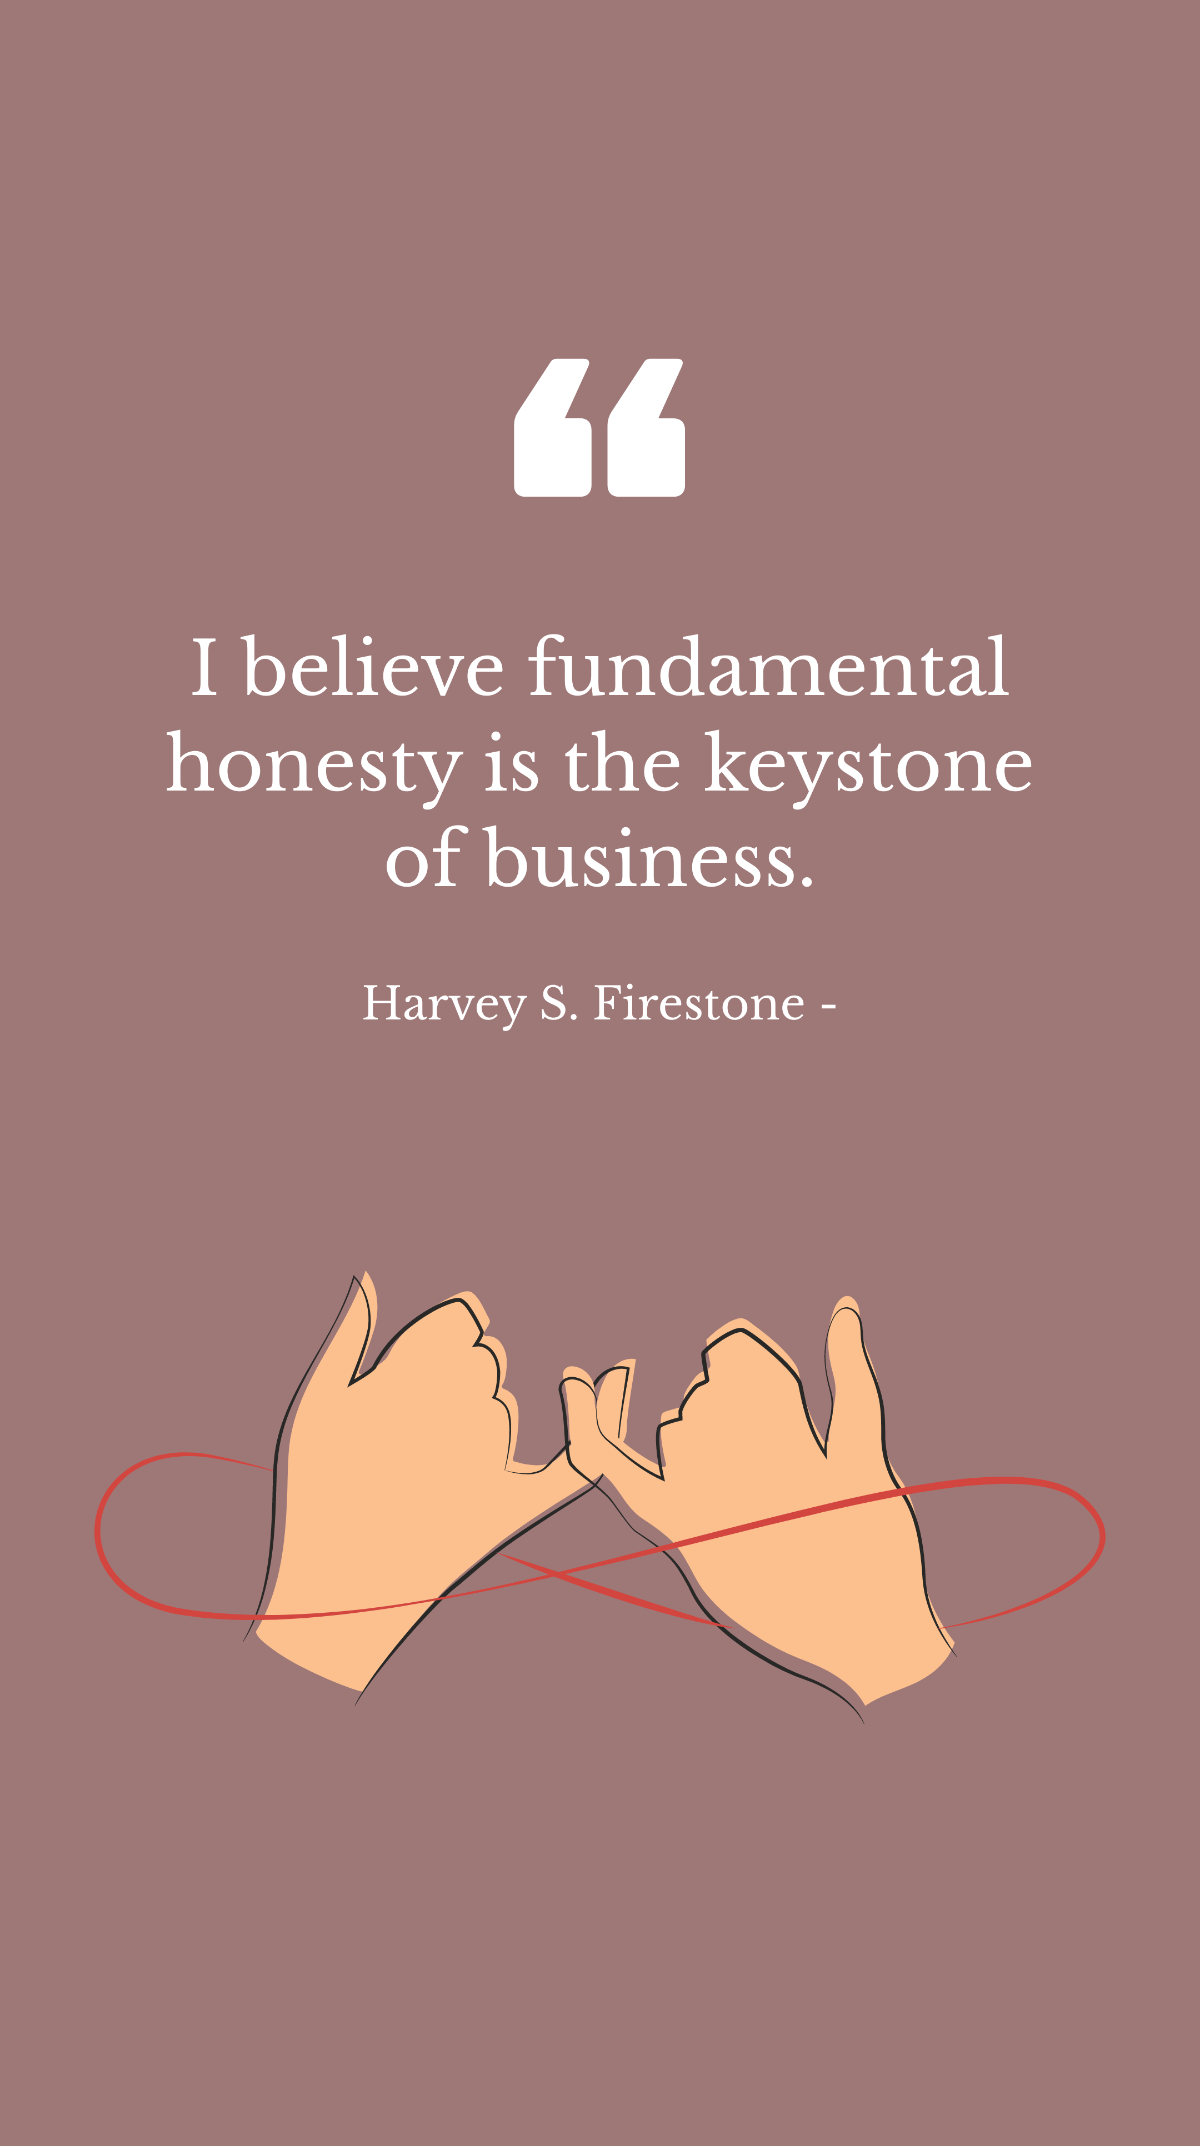 Harvey S. Firestone - I believe fundamental honesty is the keystone of business. Template